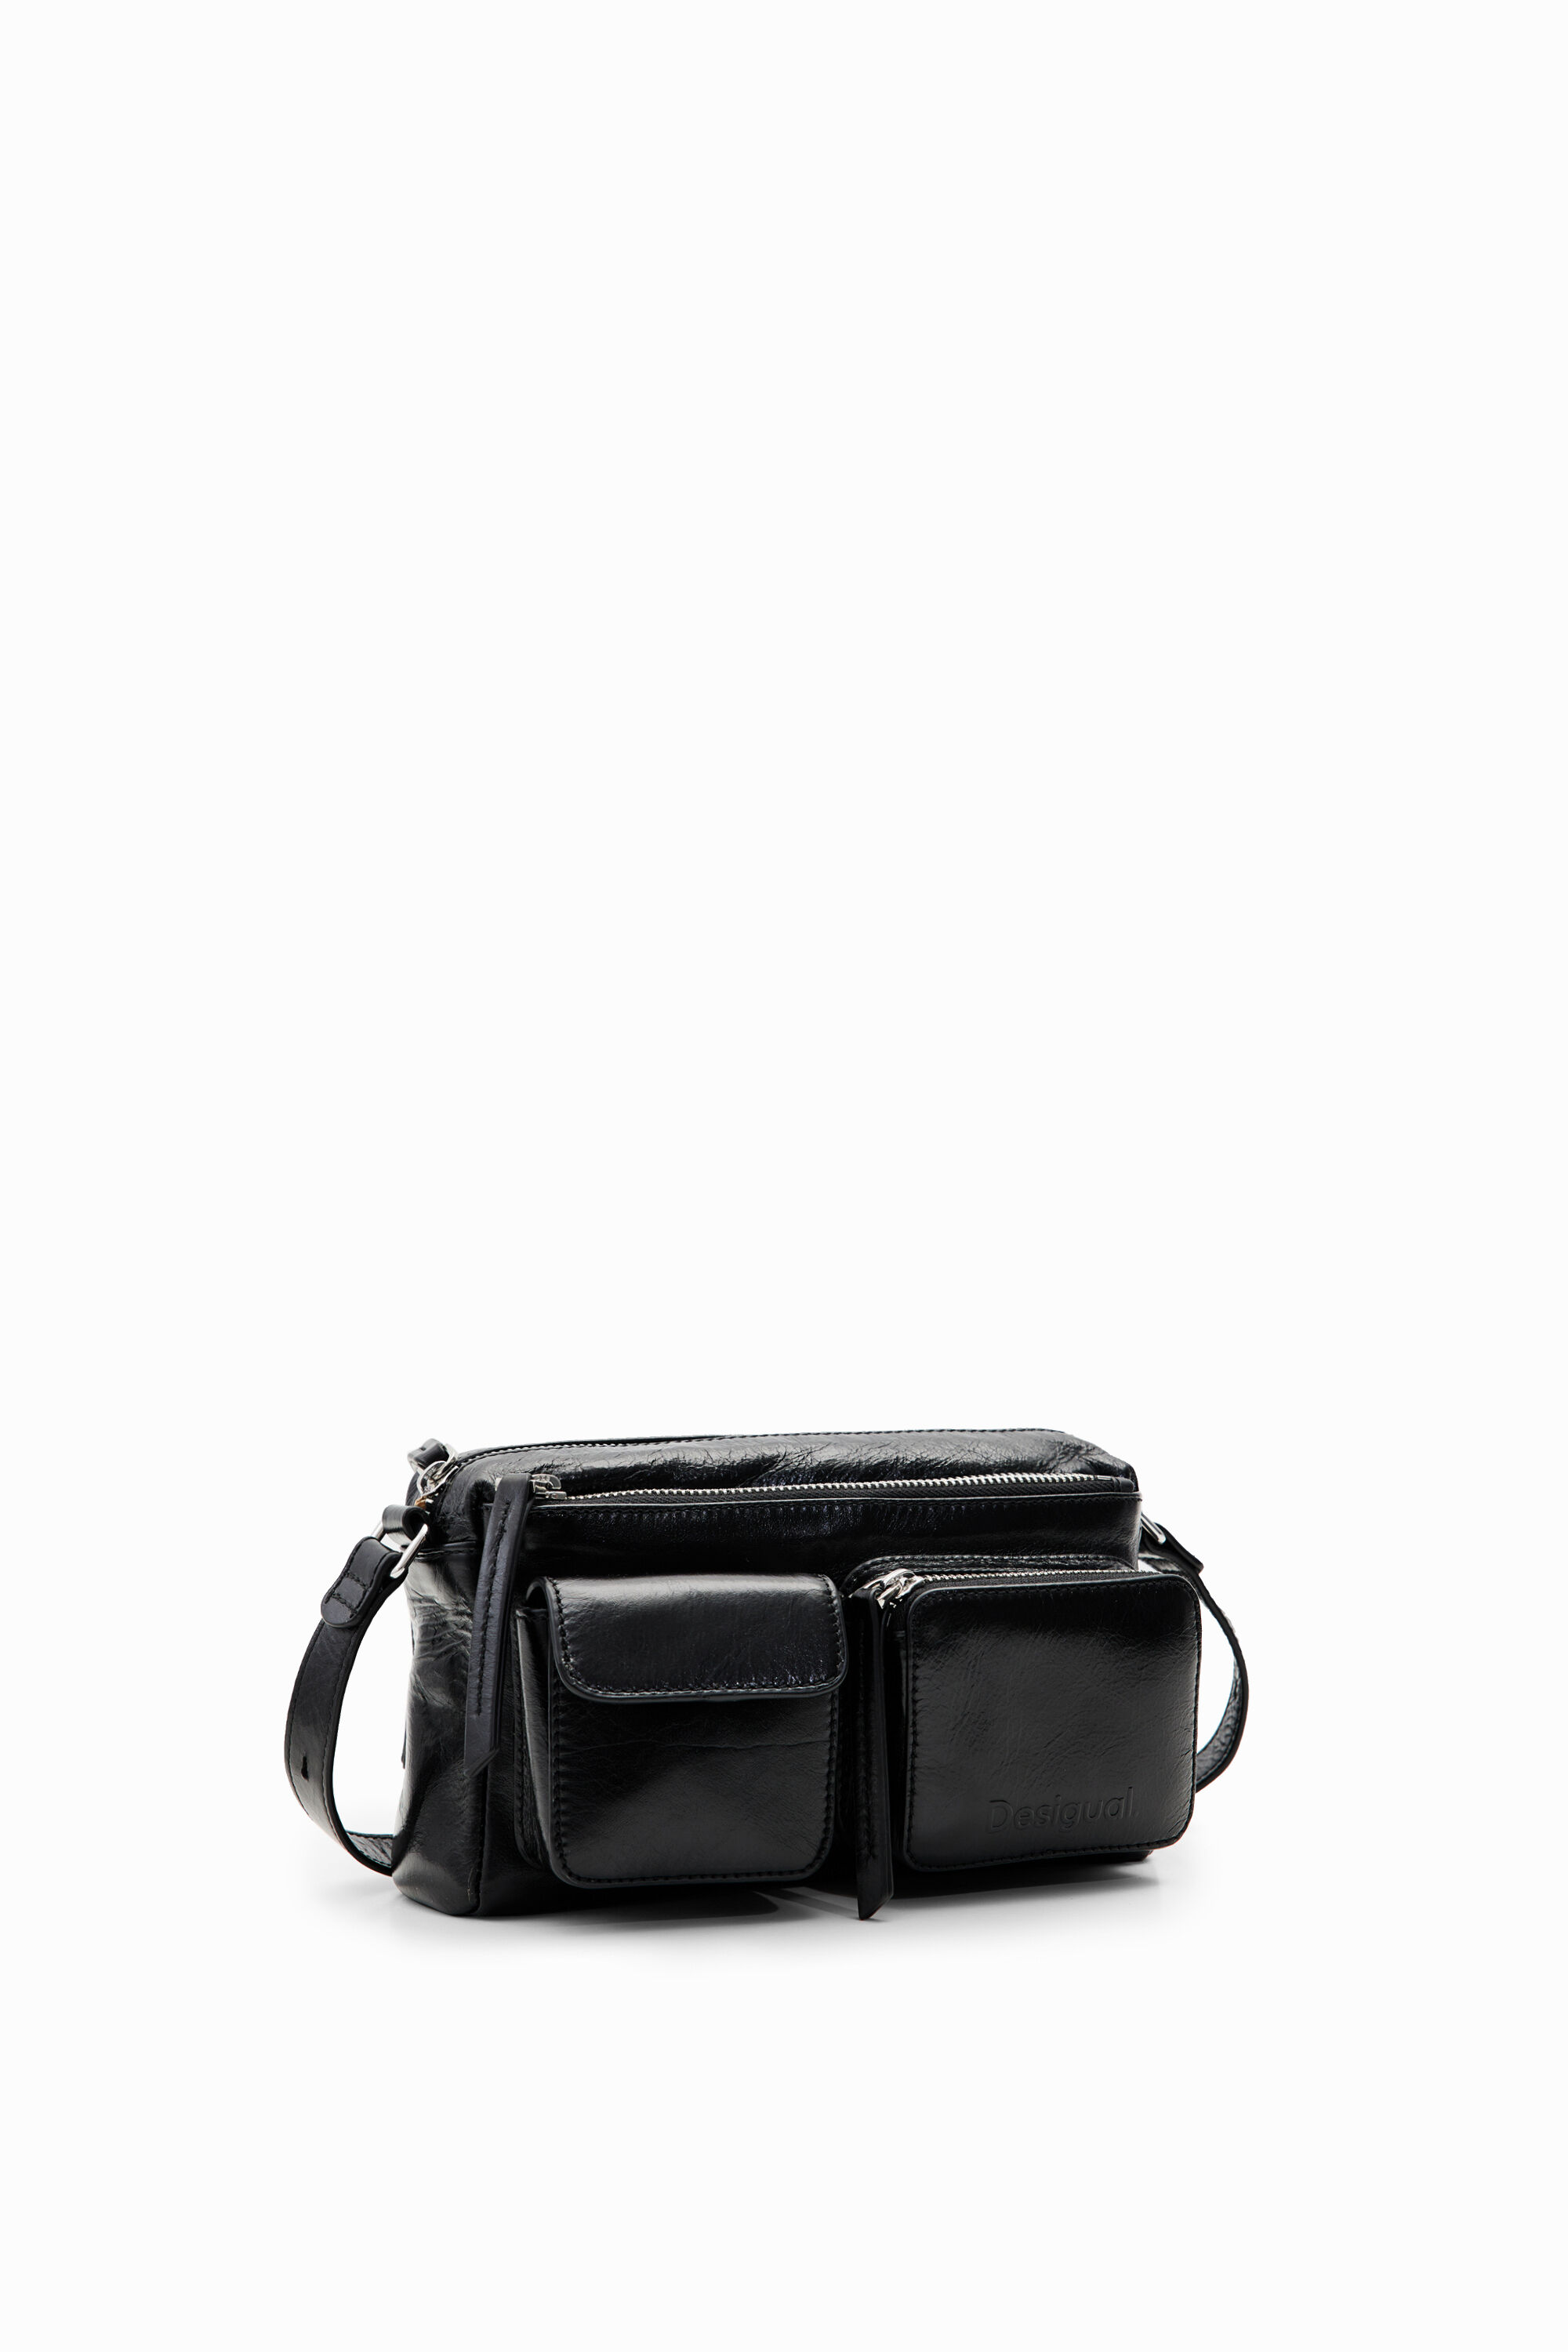 Desigual Small pockets leather crossbody bag